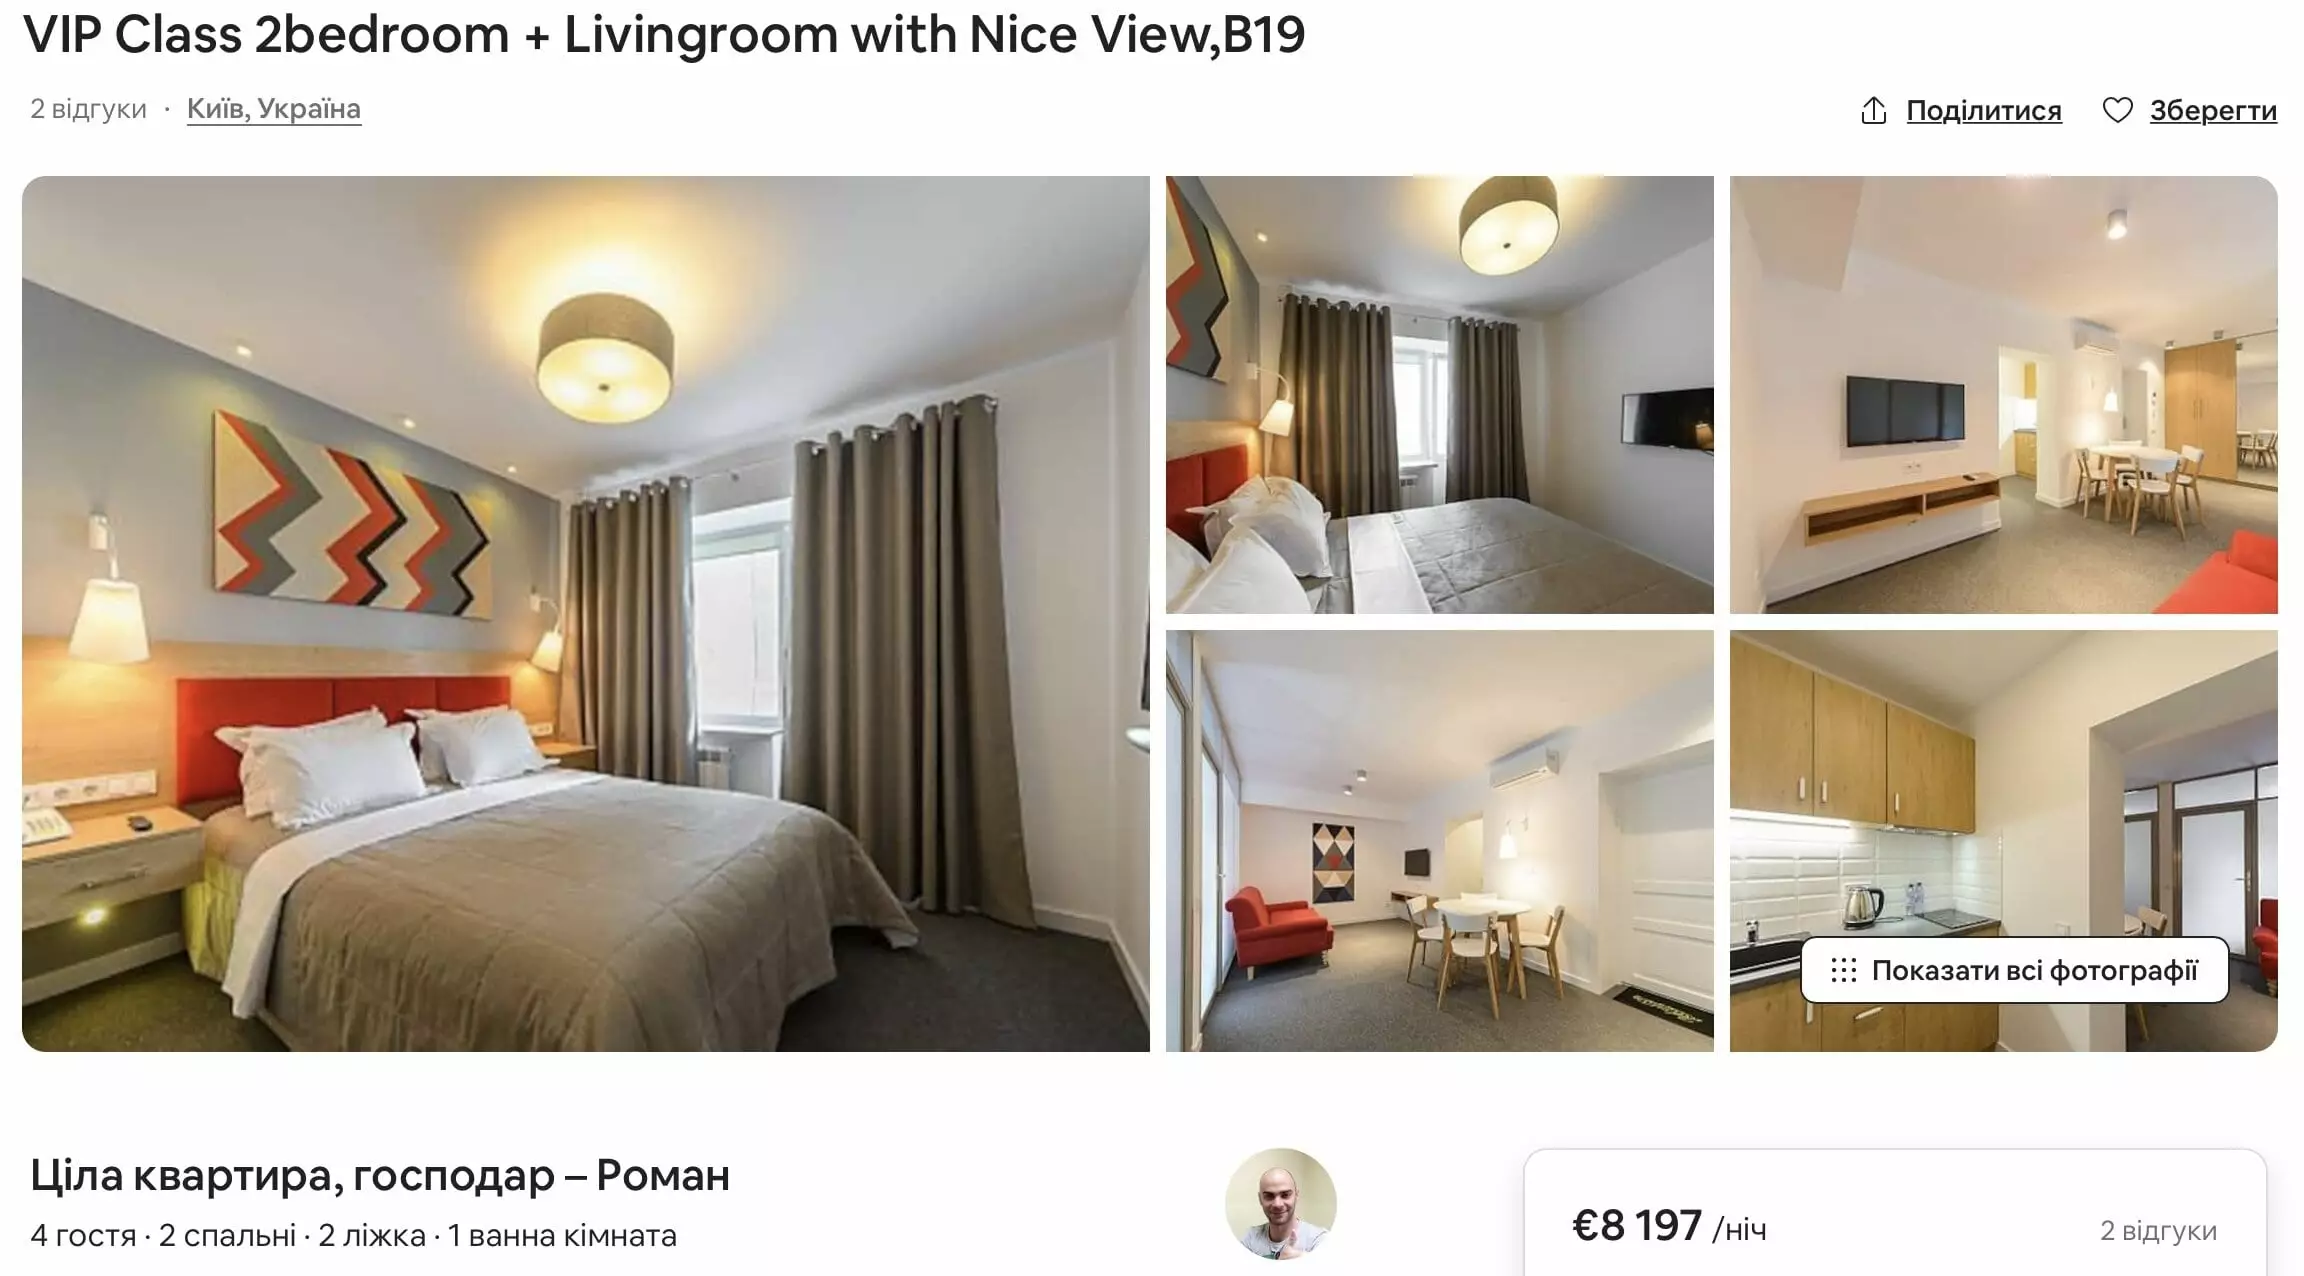 Размещение квартиры на Airbnb